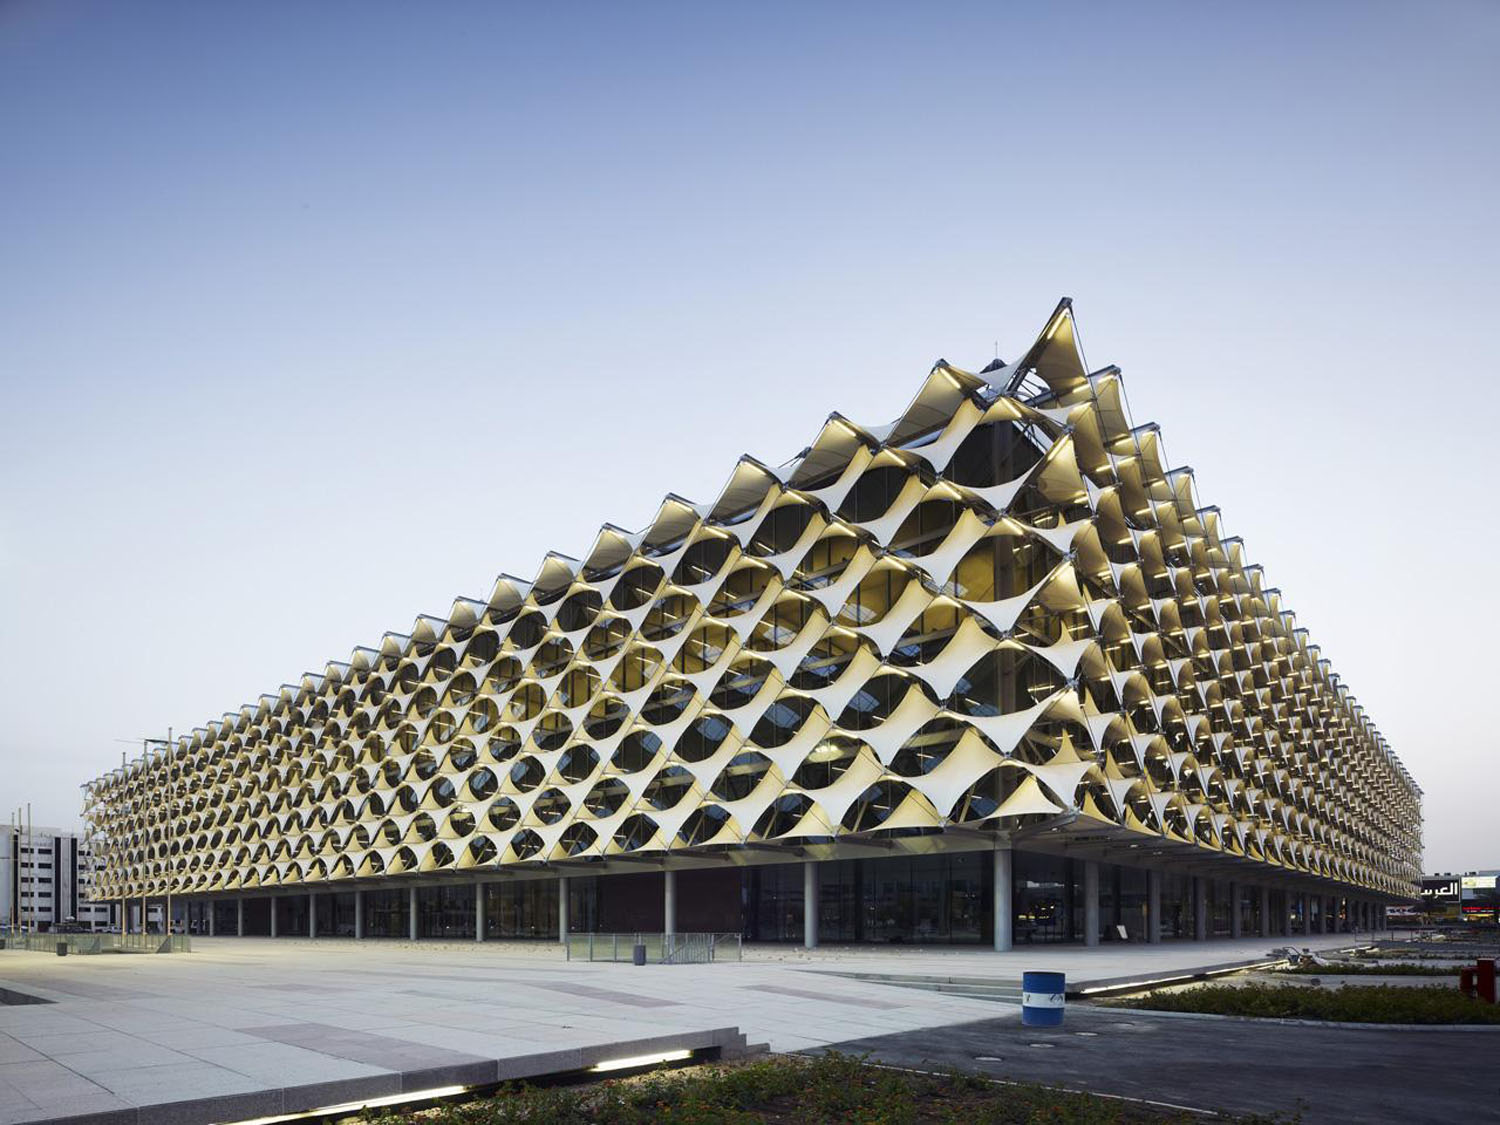 King Fahad National Library design by Gerber Architekten